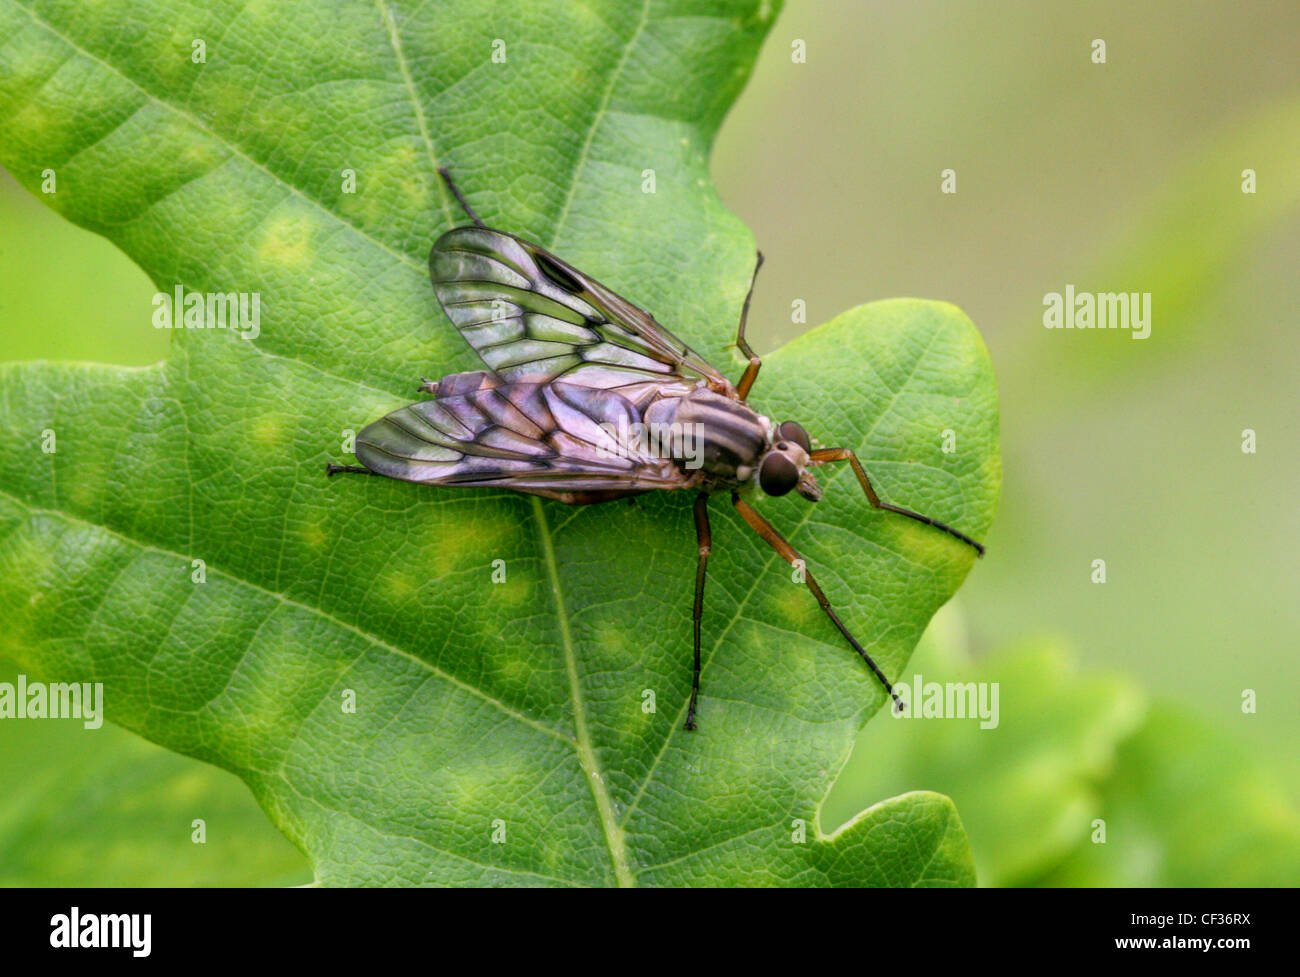 Downlooker Snipe Fly, Rhagio scolopaceus, Rhagionidae, Diptera. Female. Common British Insect. Stock Photo